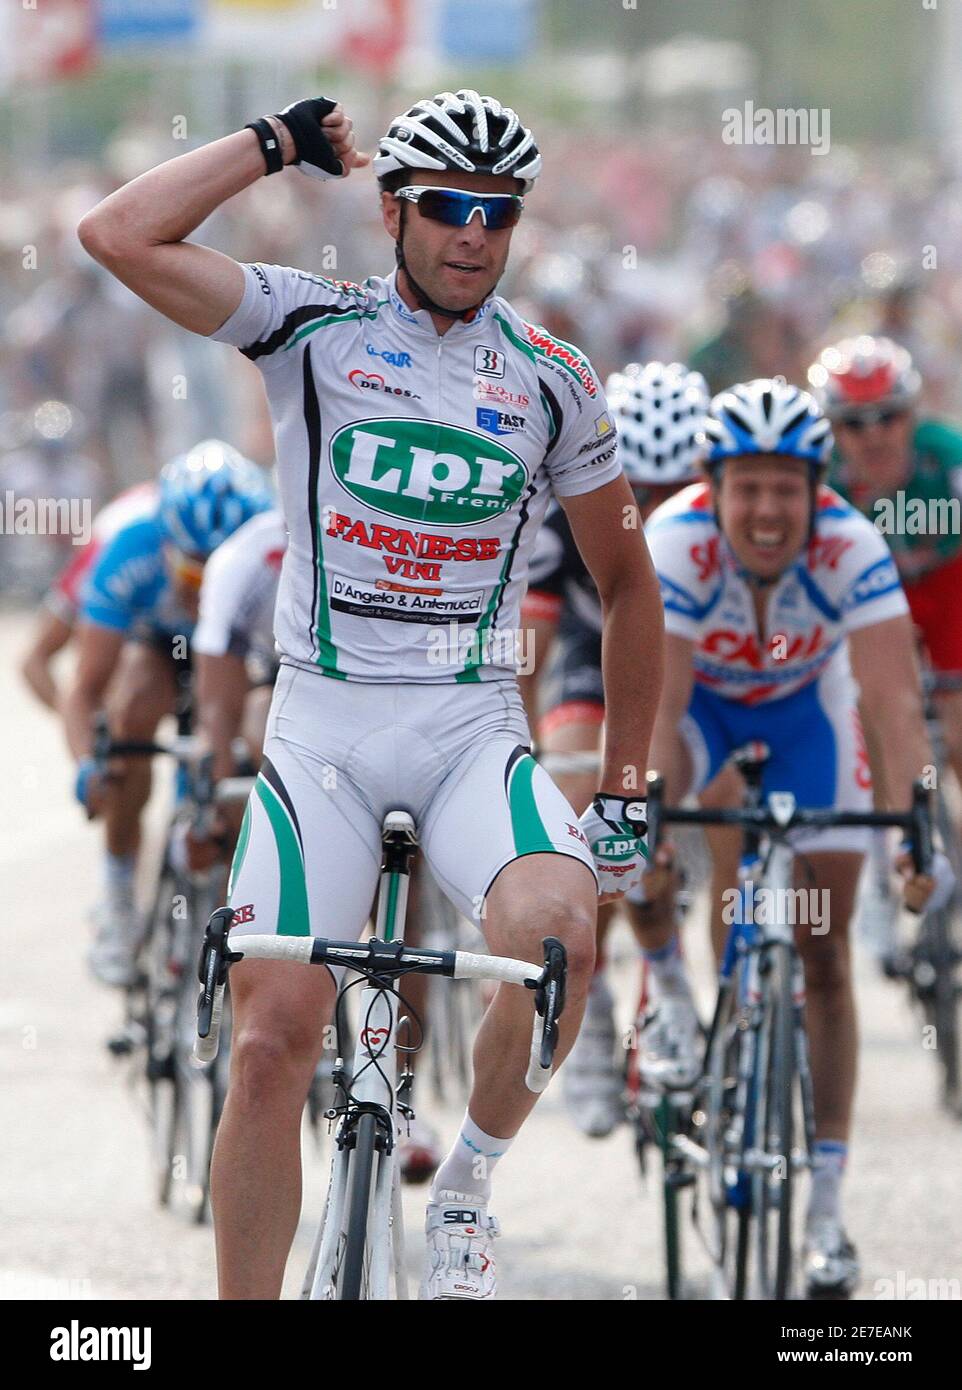 Alessandro Petacchi of Italy his arm as he crosses the finishing line of the 97th Scheldeprijs/Grand Prix de l'Escaut cycling race in Schoten April 15, 2009. Kenny Van Hummel (R) of